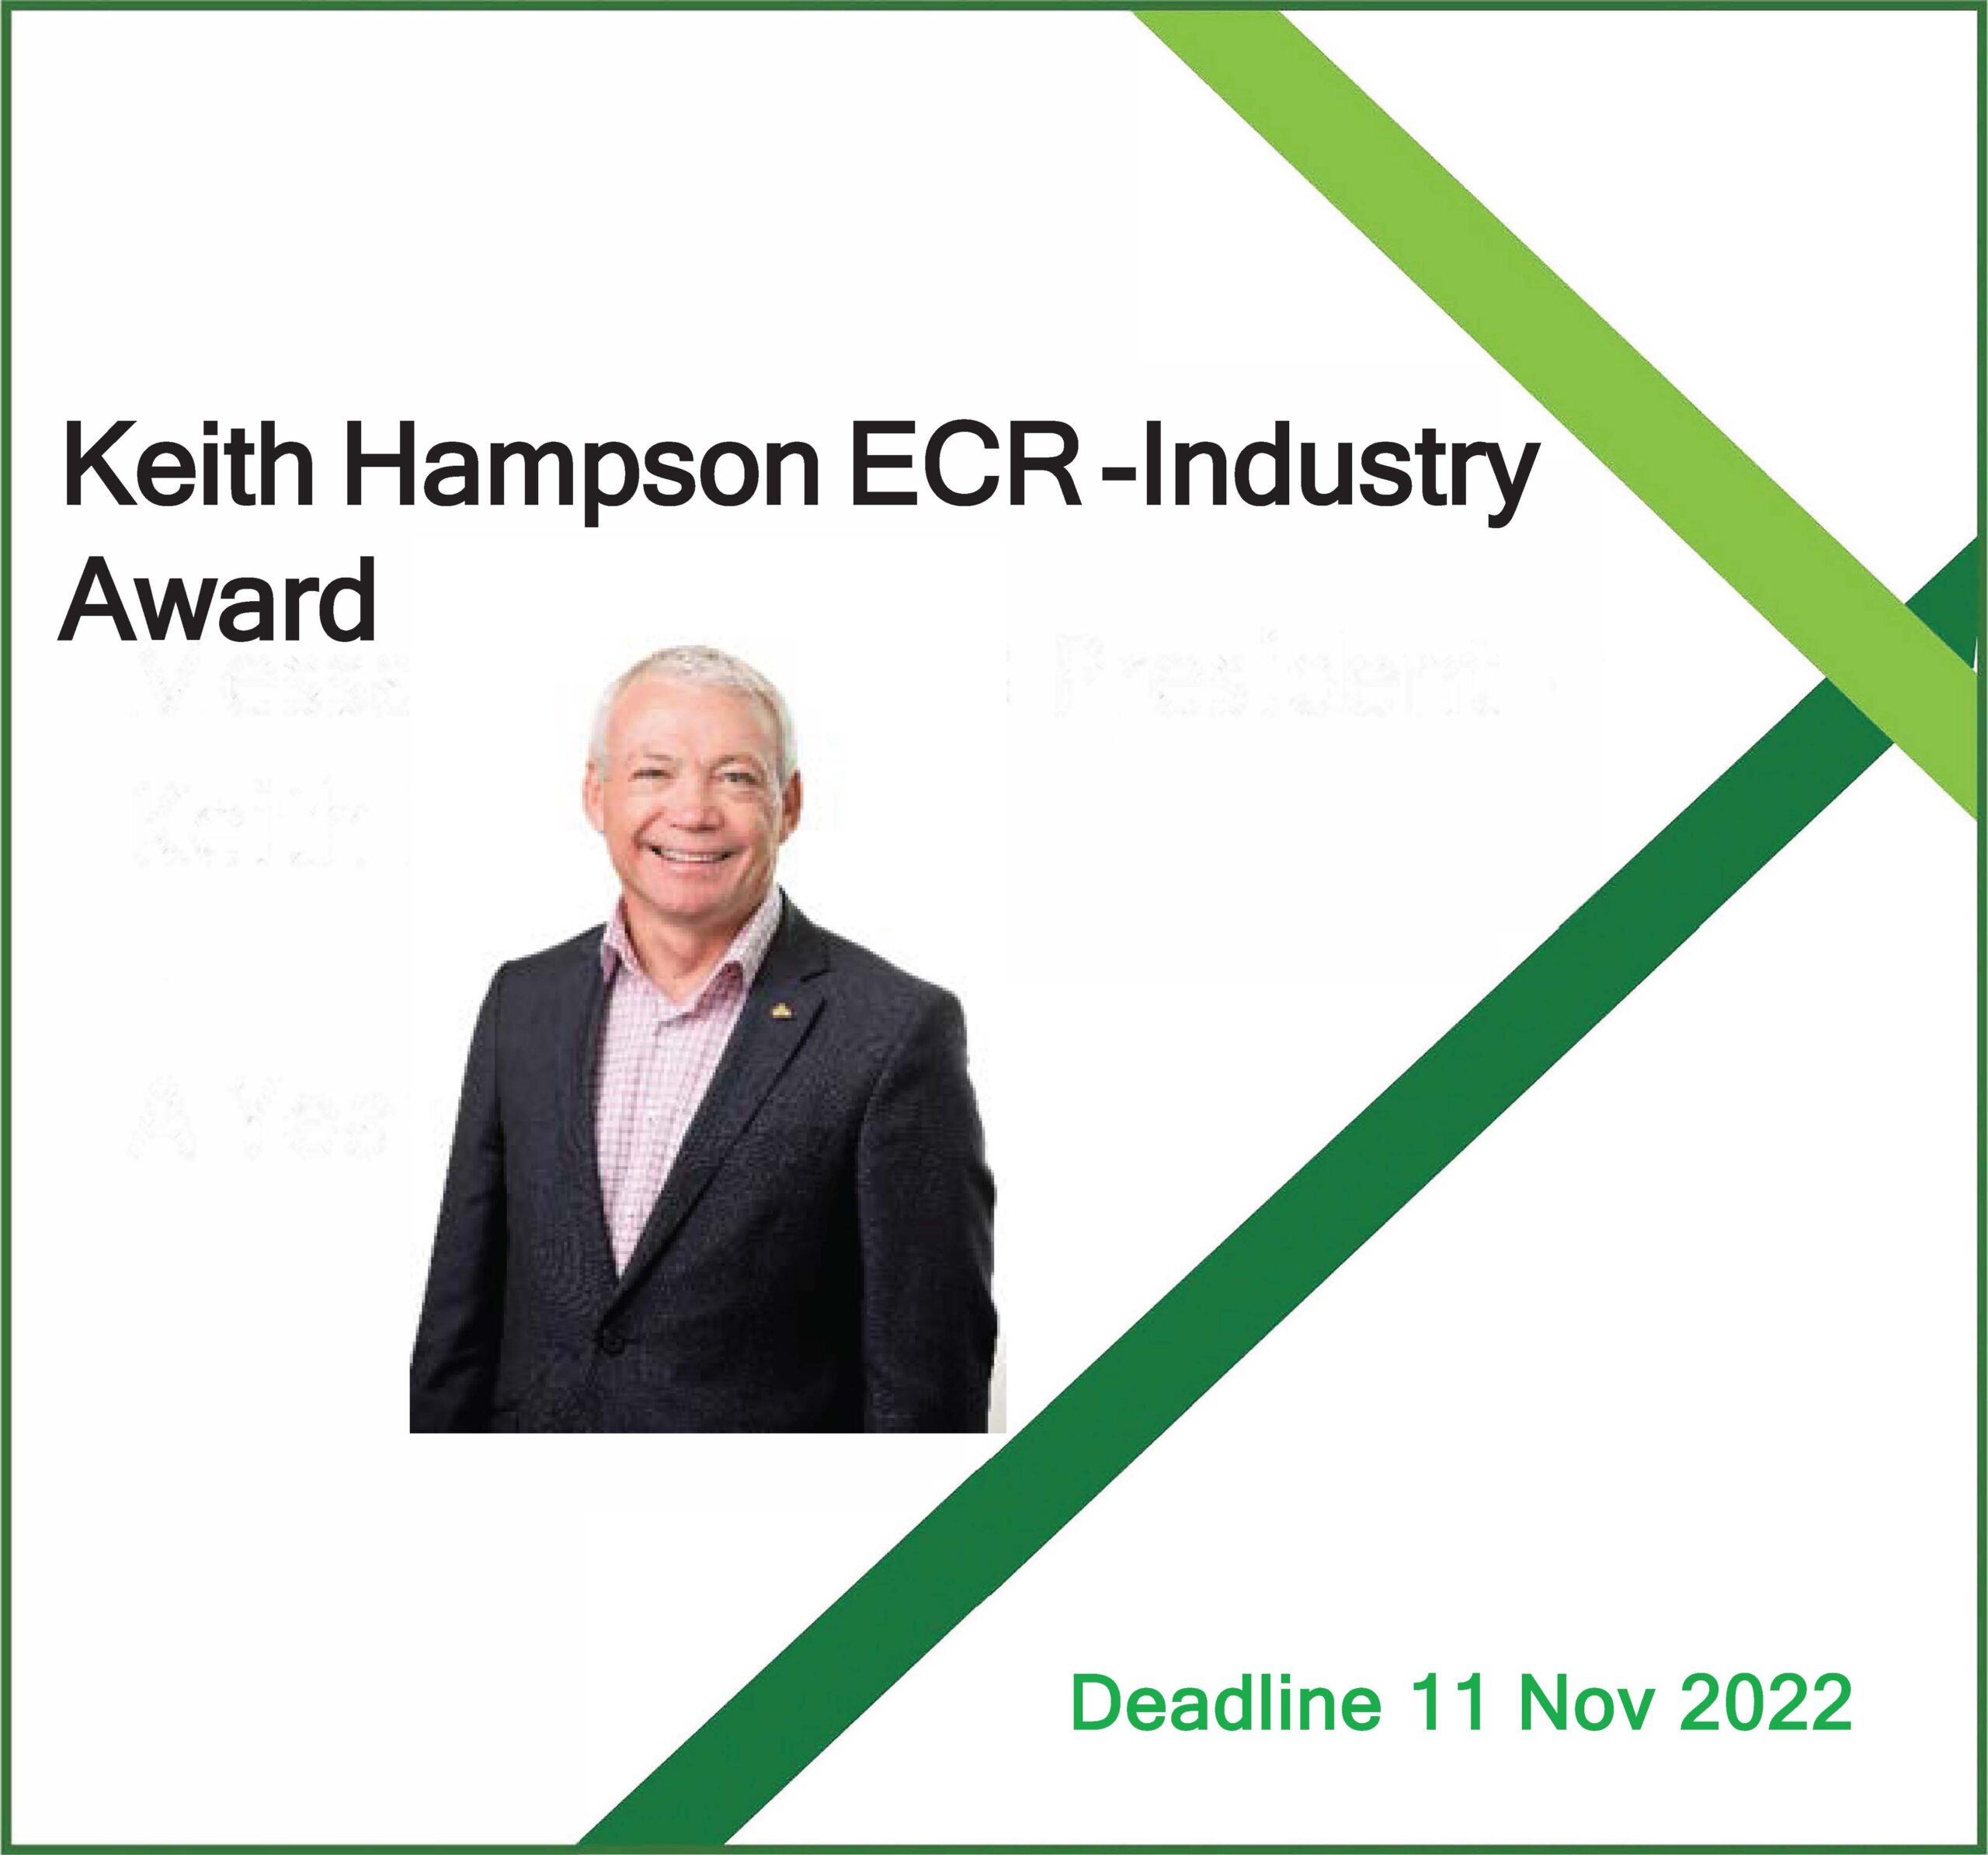 Keith Hampson ECR-Industry Award: Deadline 11 Nov 2022